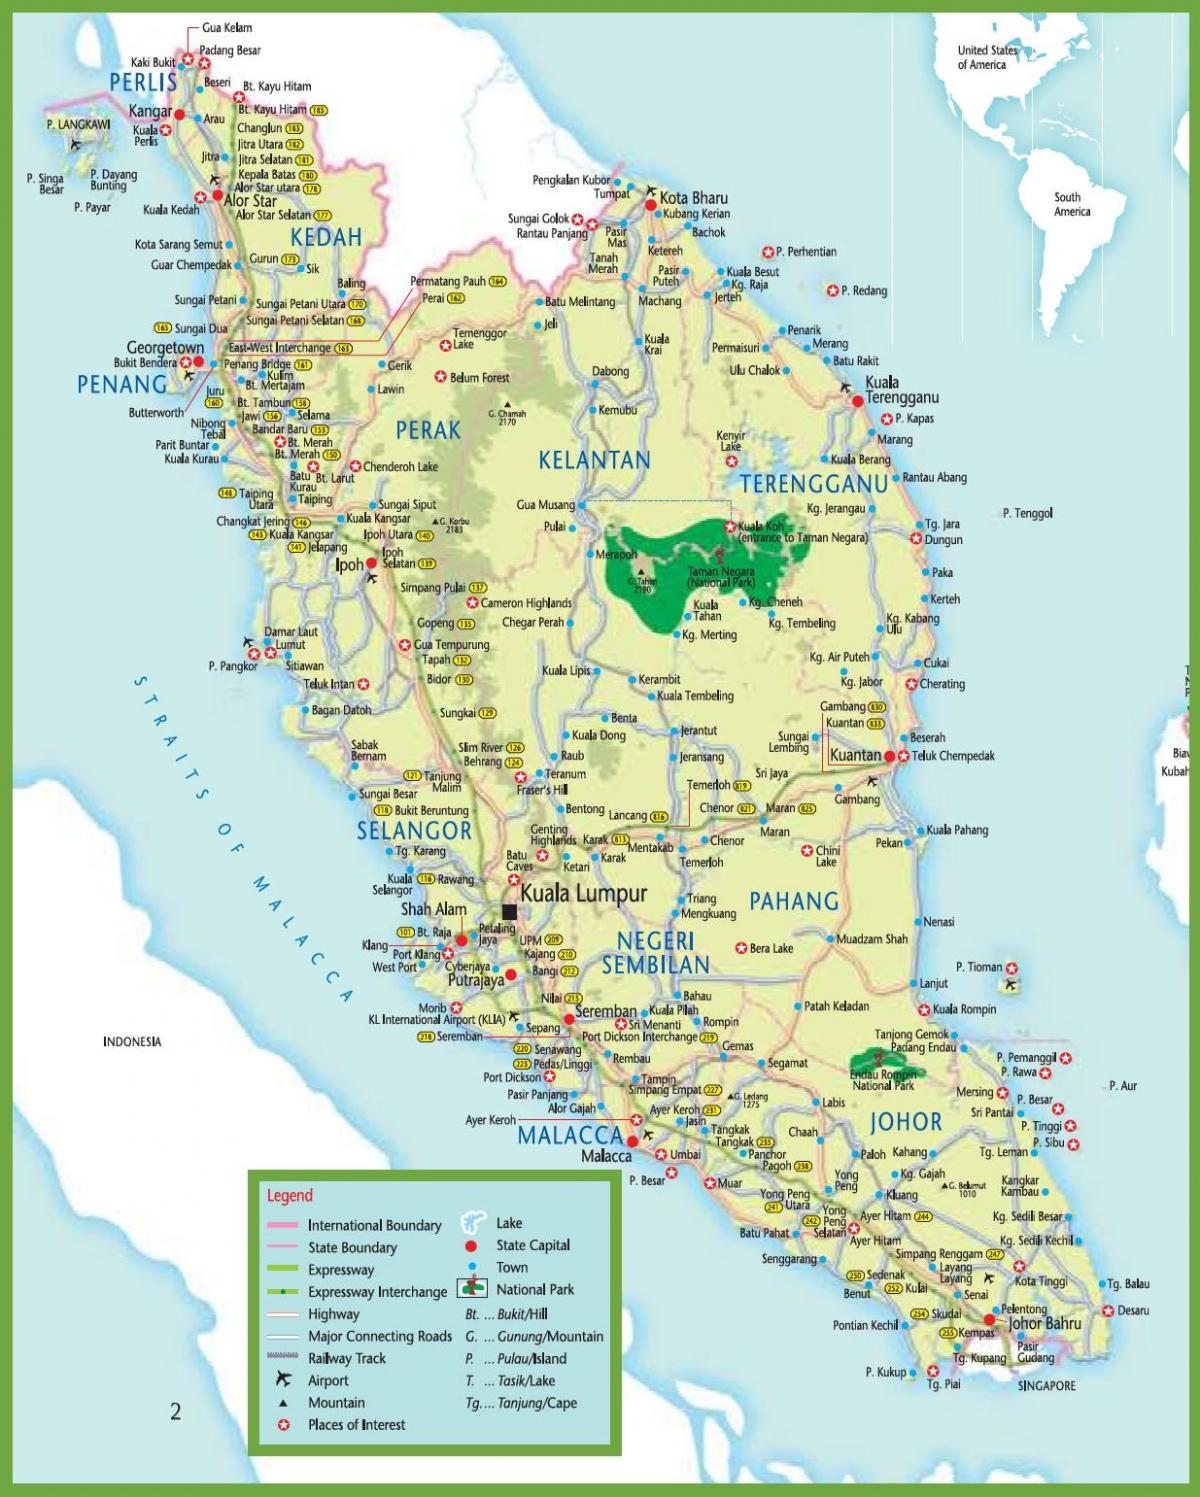 mrt地図マレーシア